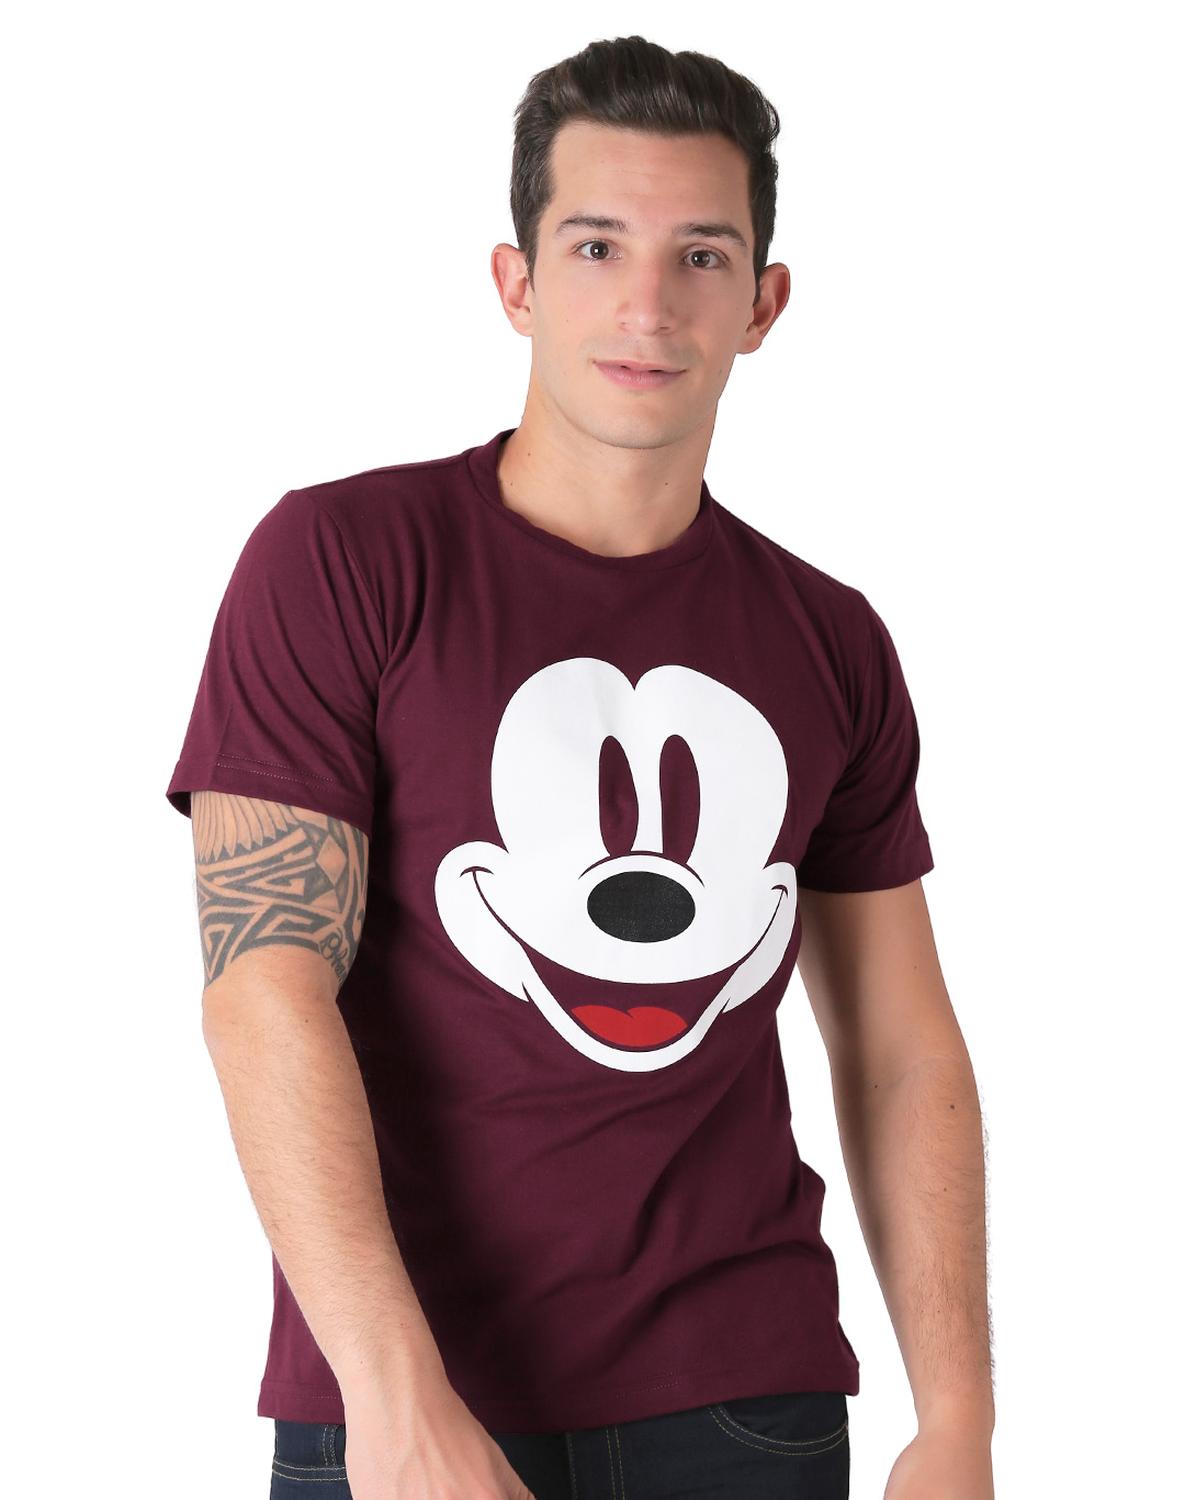 Playera Moda Camiseta Hombre Vino Disney 58204821